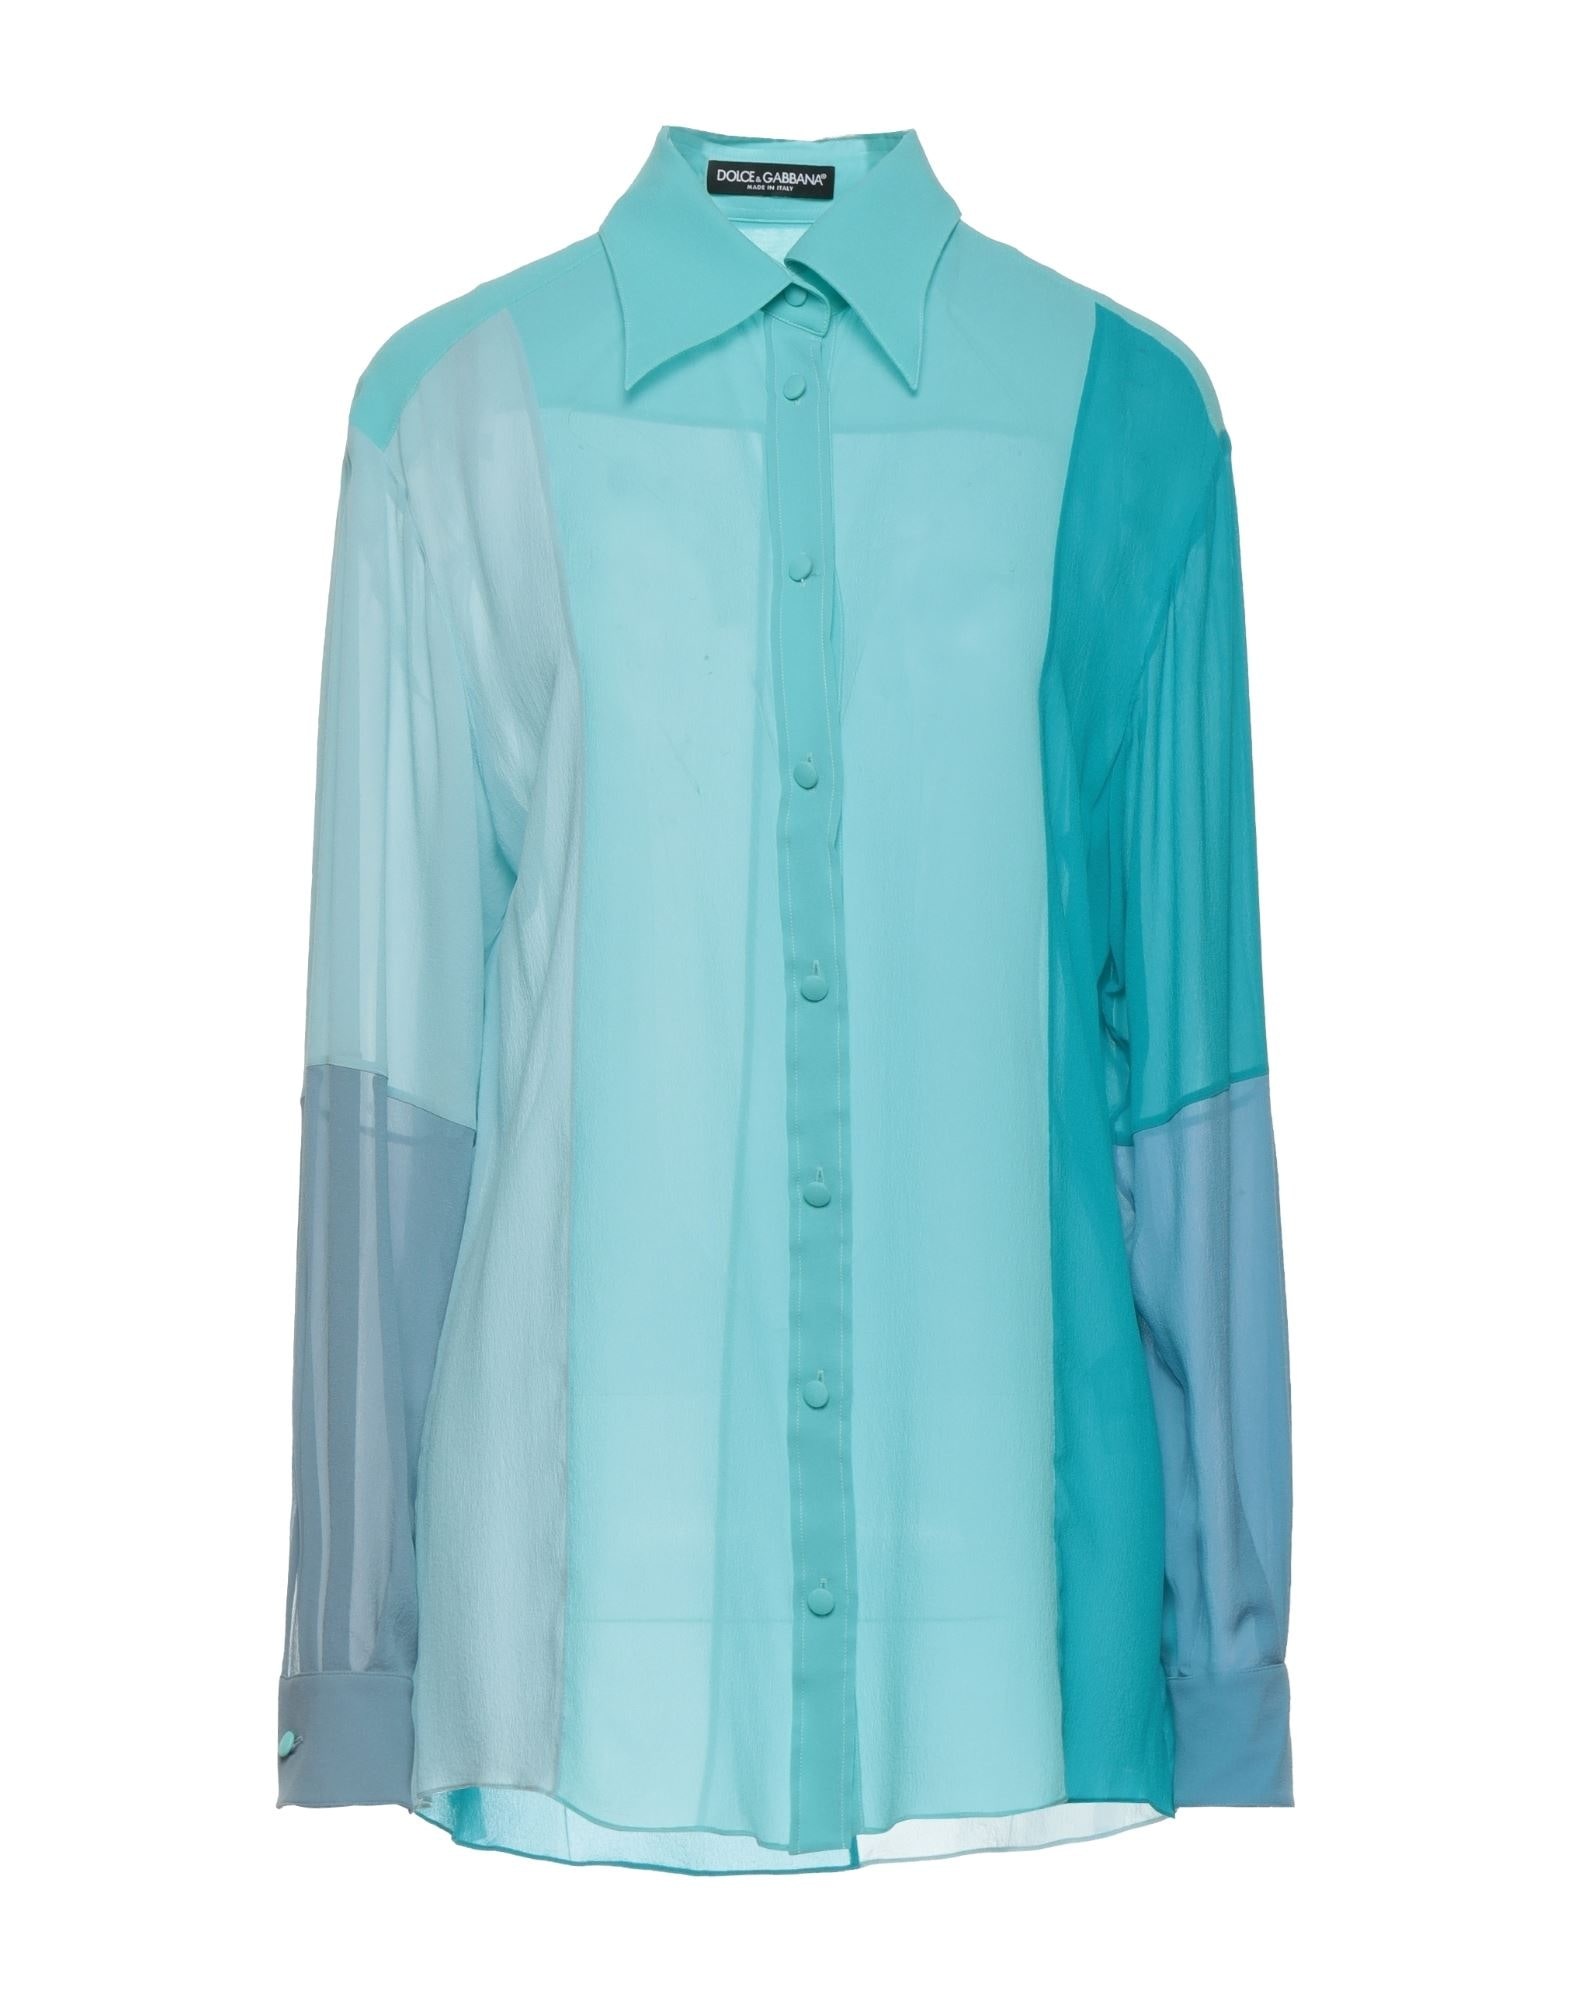 Sky blue Women's Patterned Shirts & Blouses - 1